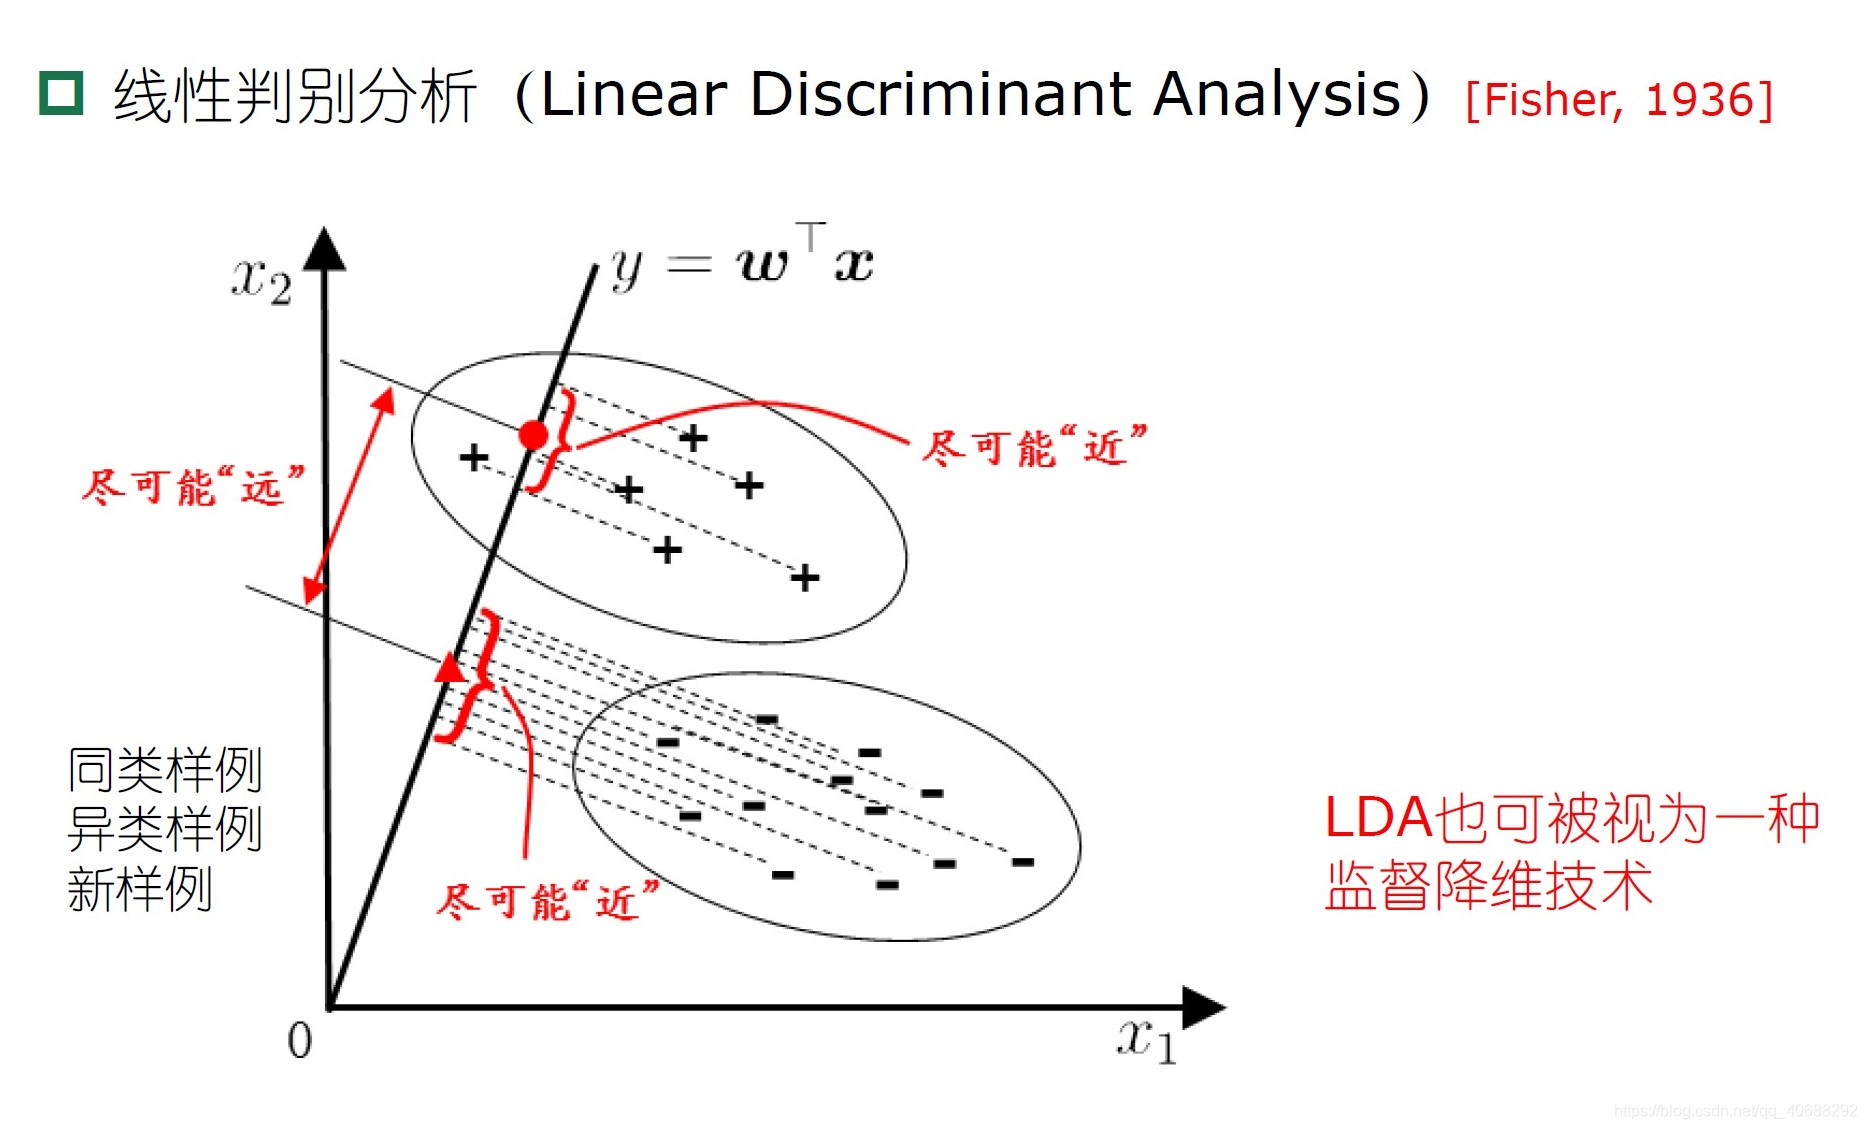 LDA算法图例